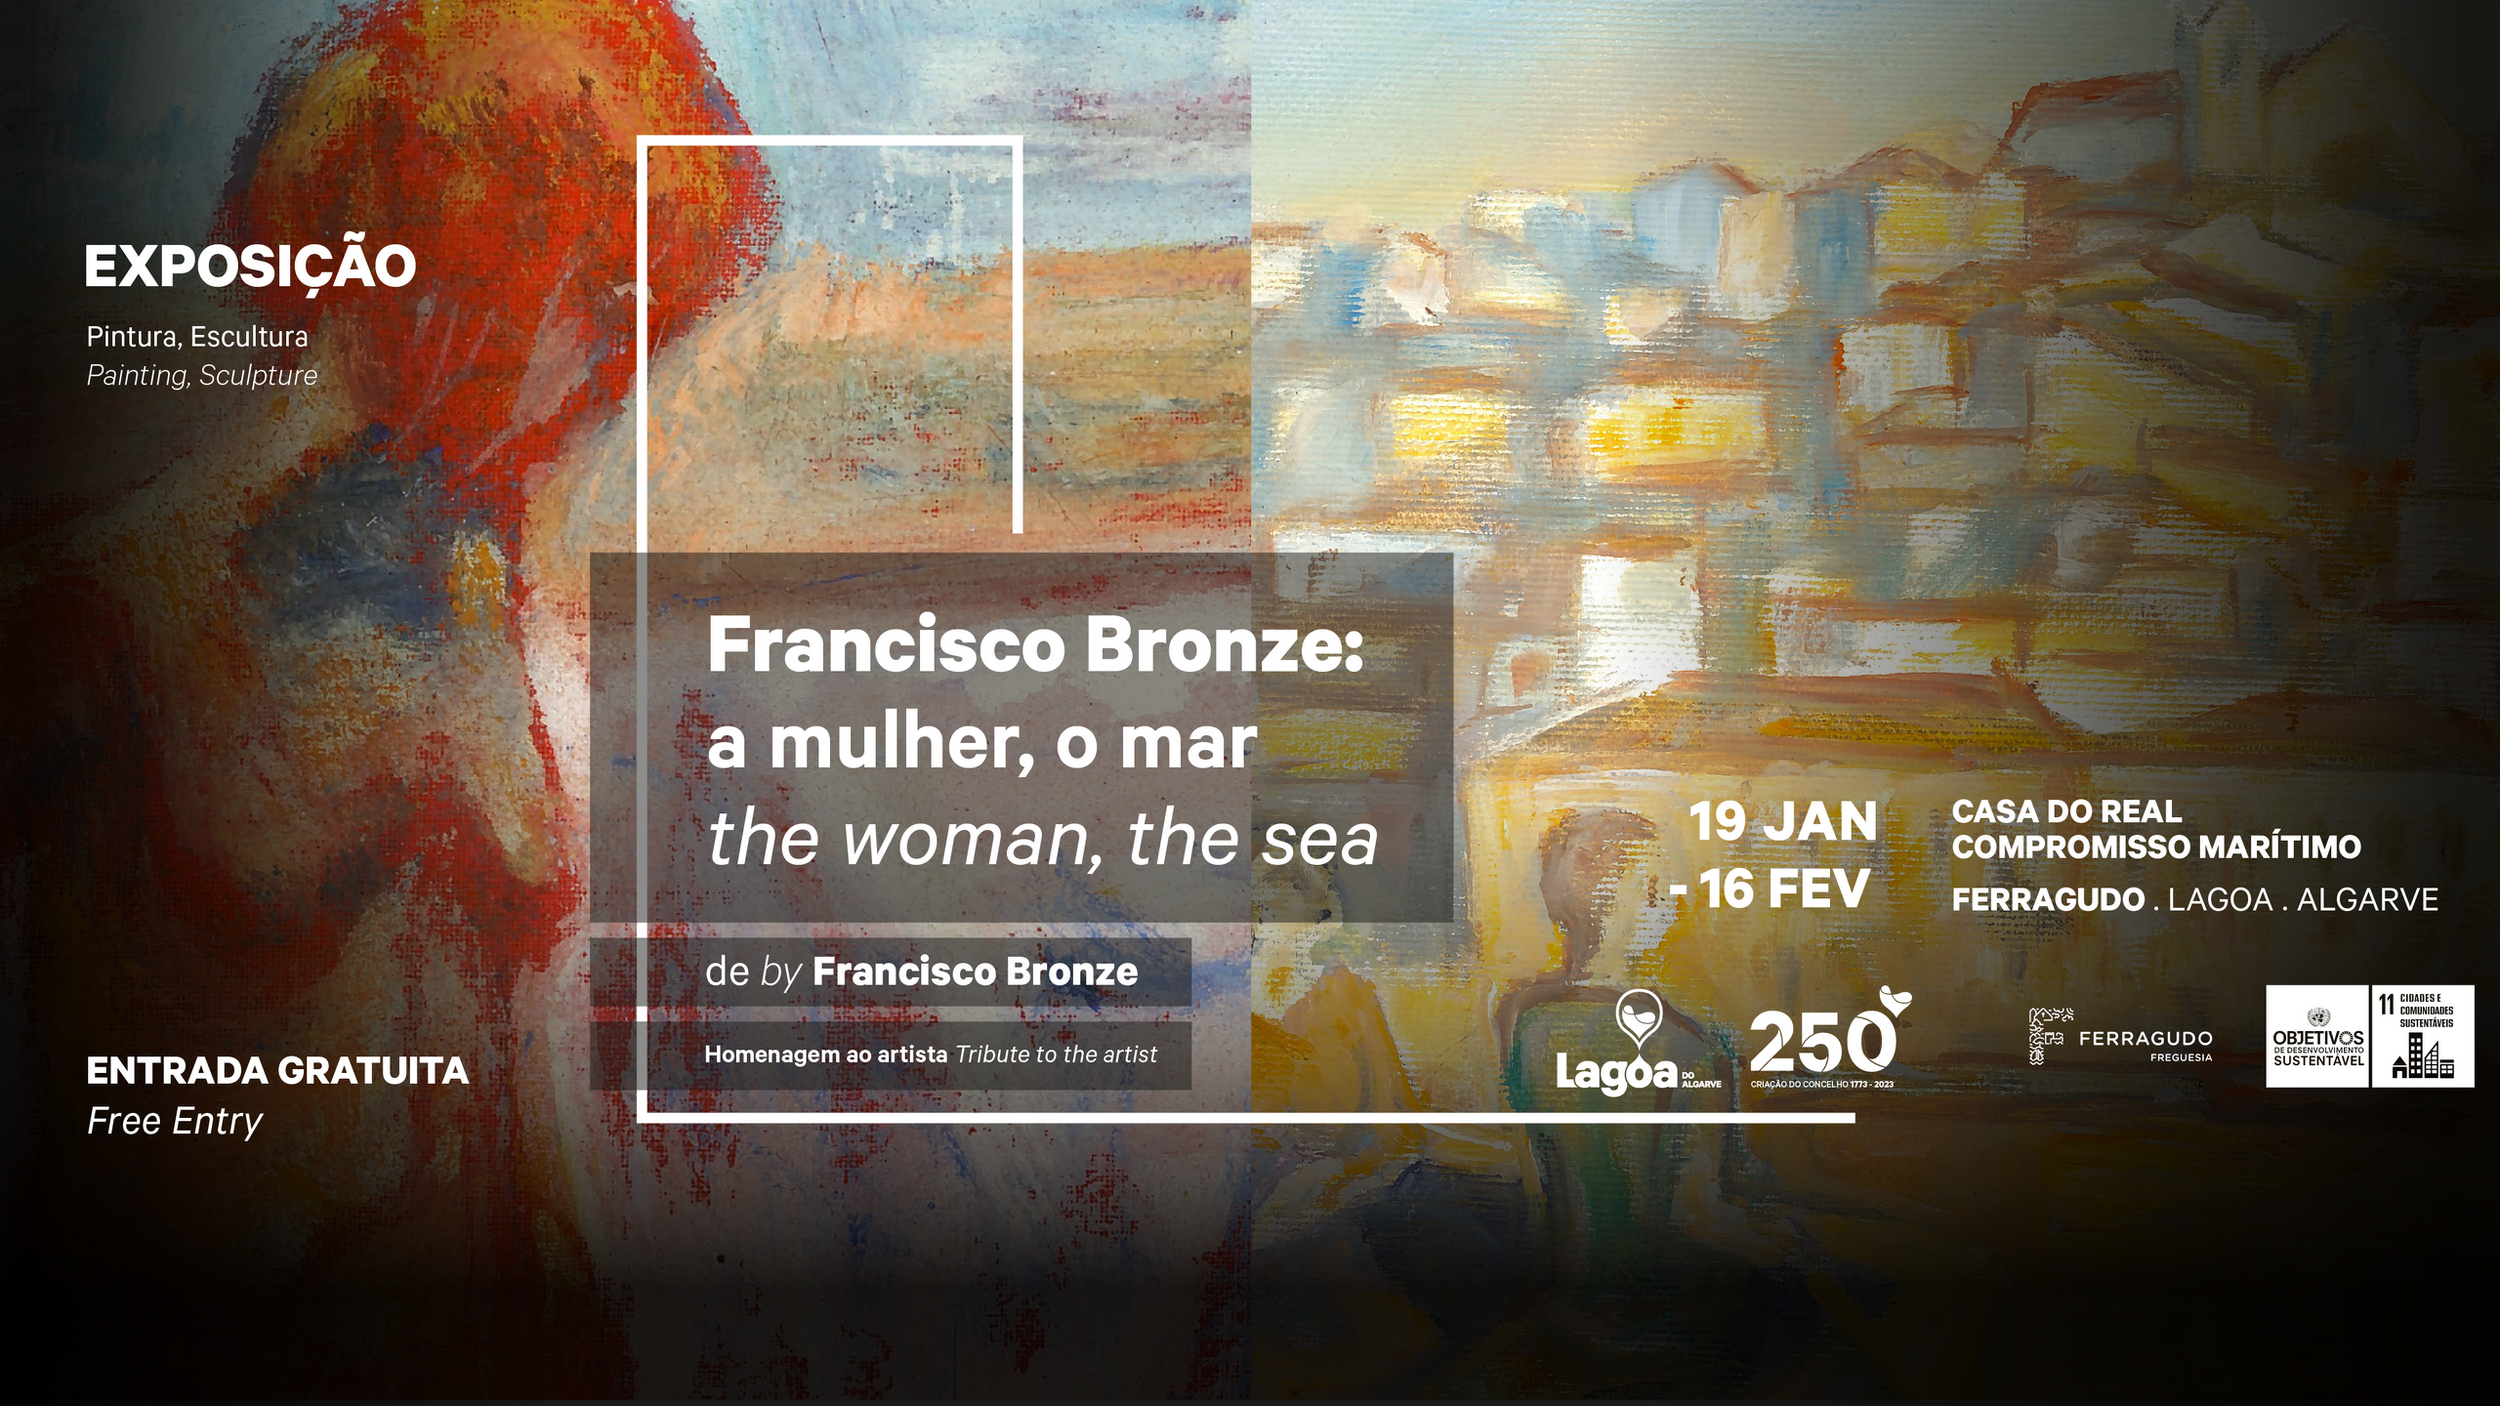 Francisco Bronze: a mulher, o mar - the woman, the sea